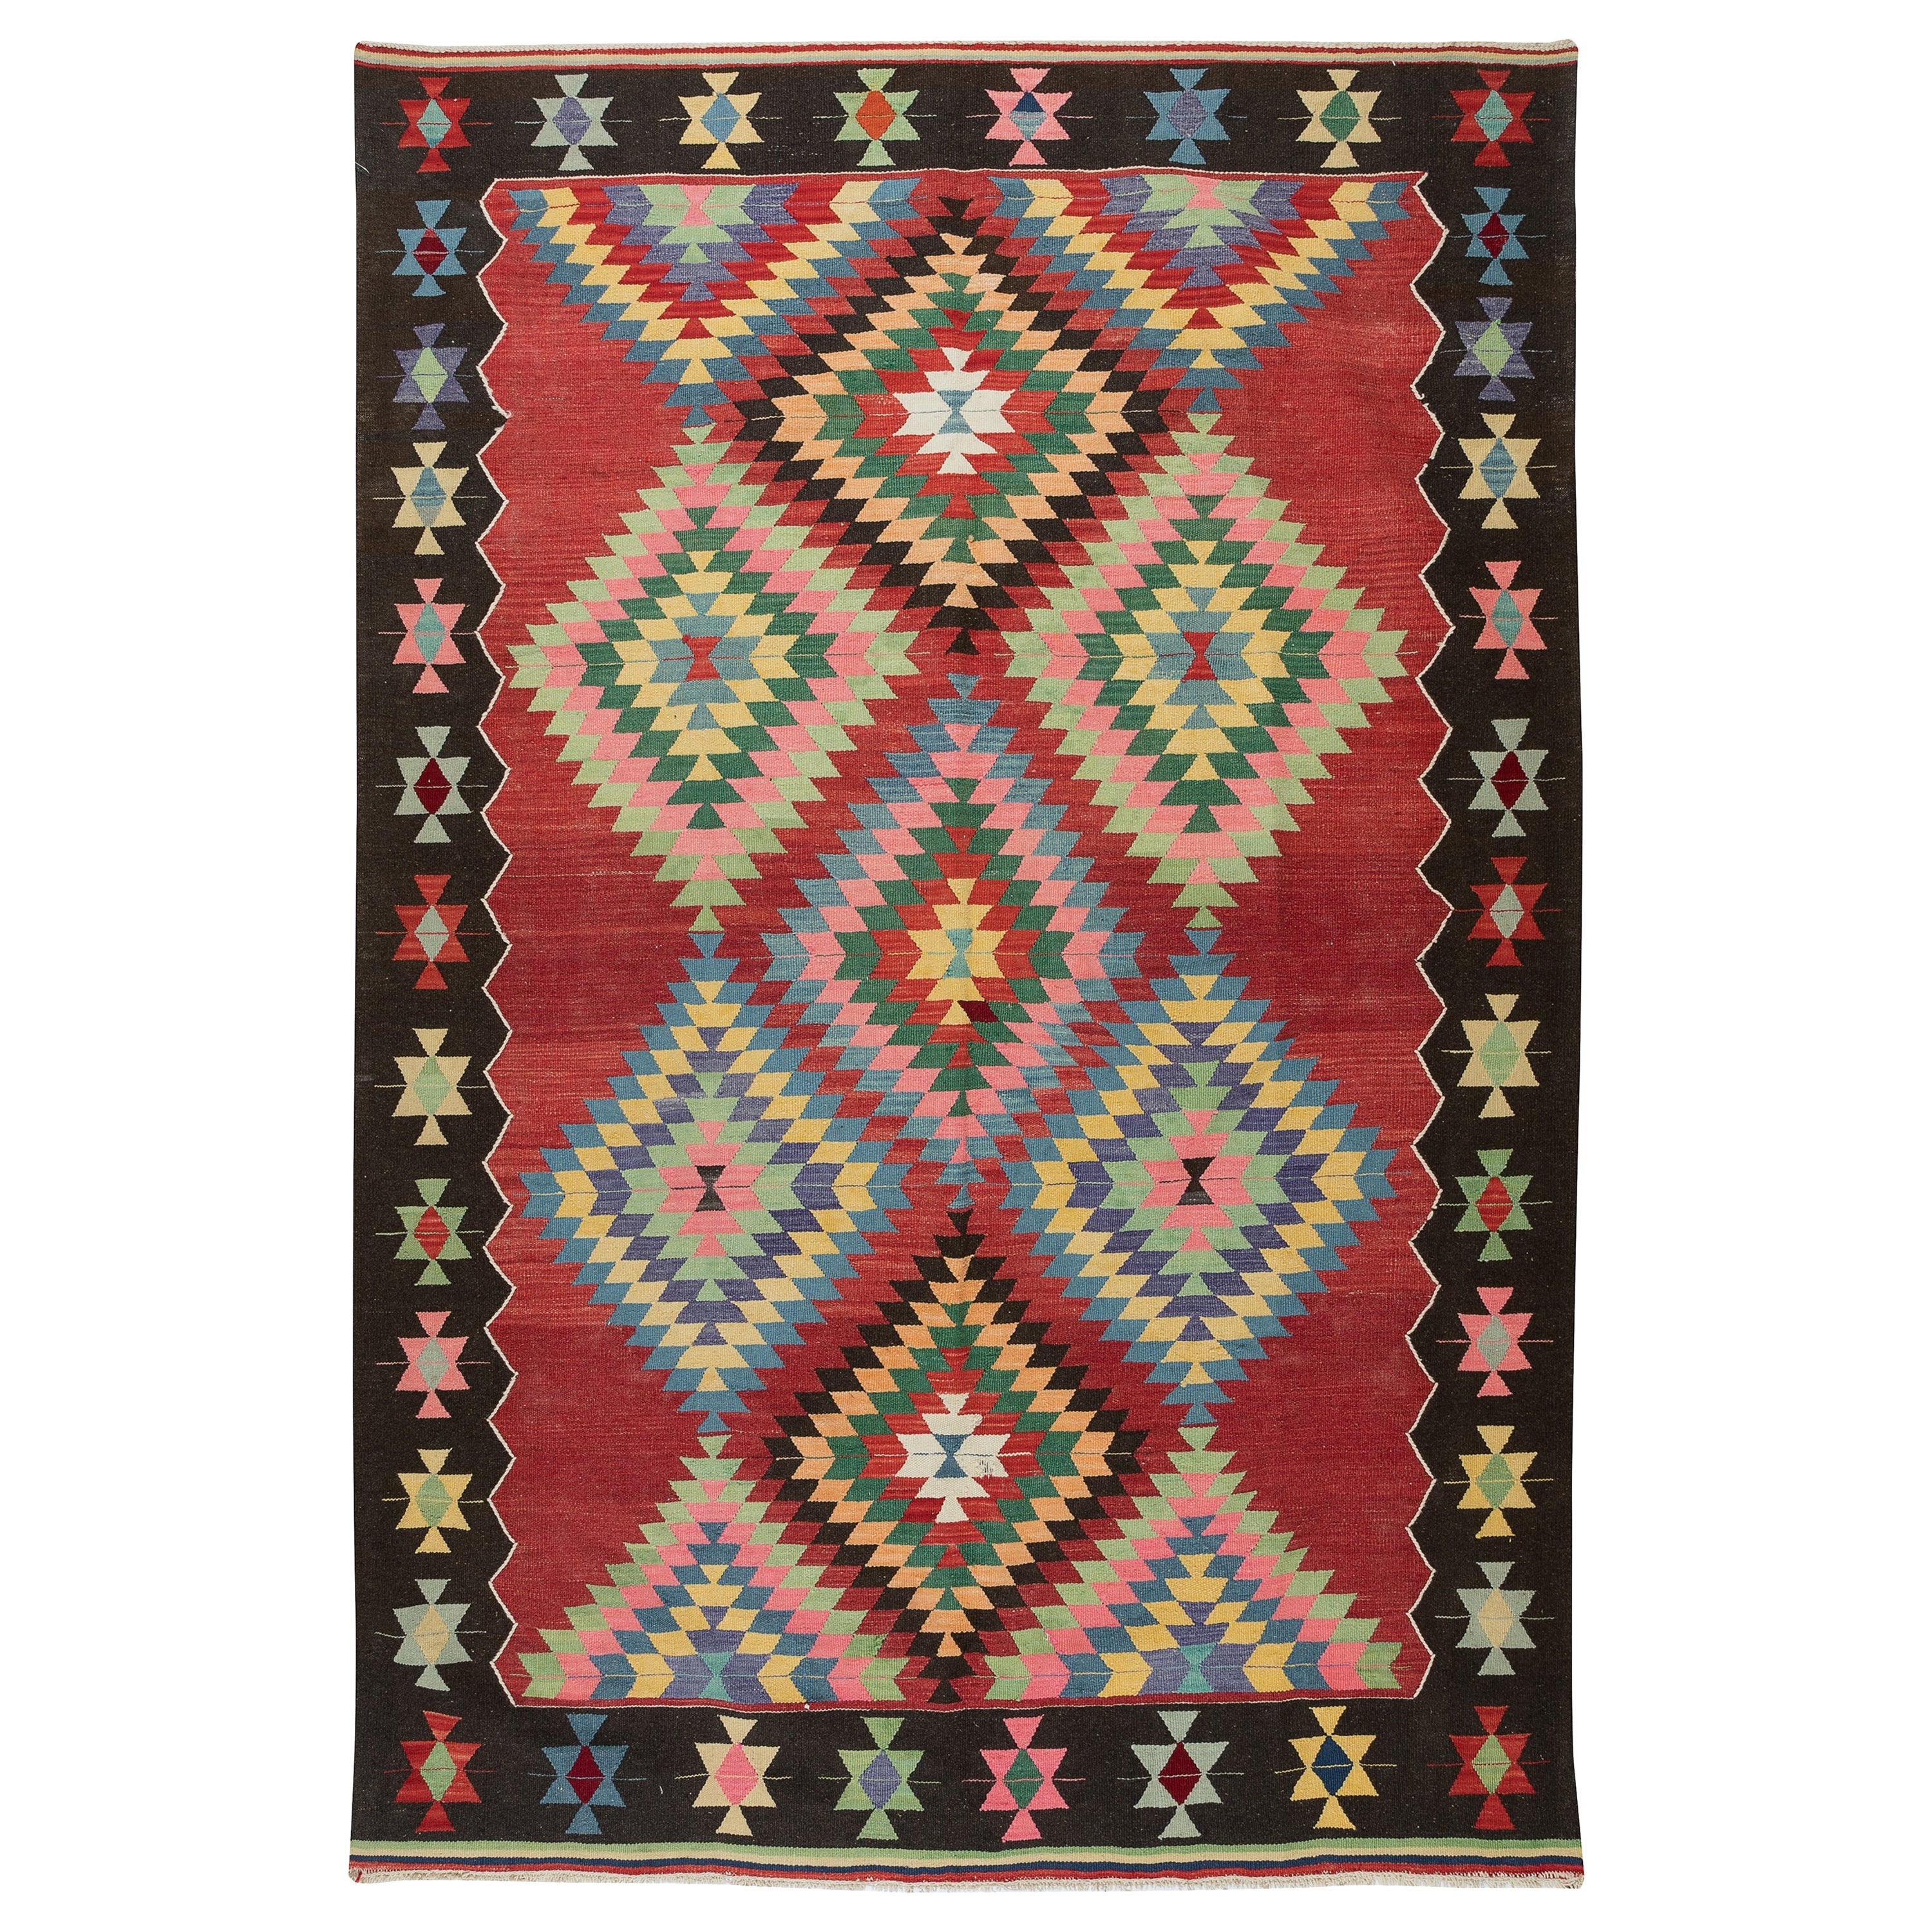 6x8.7 Ft Vintage Handmade Turkish Wool Kilim Rug in Red with Geometric Design